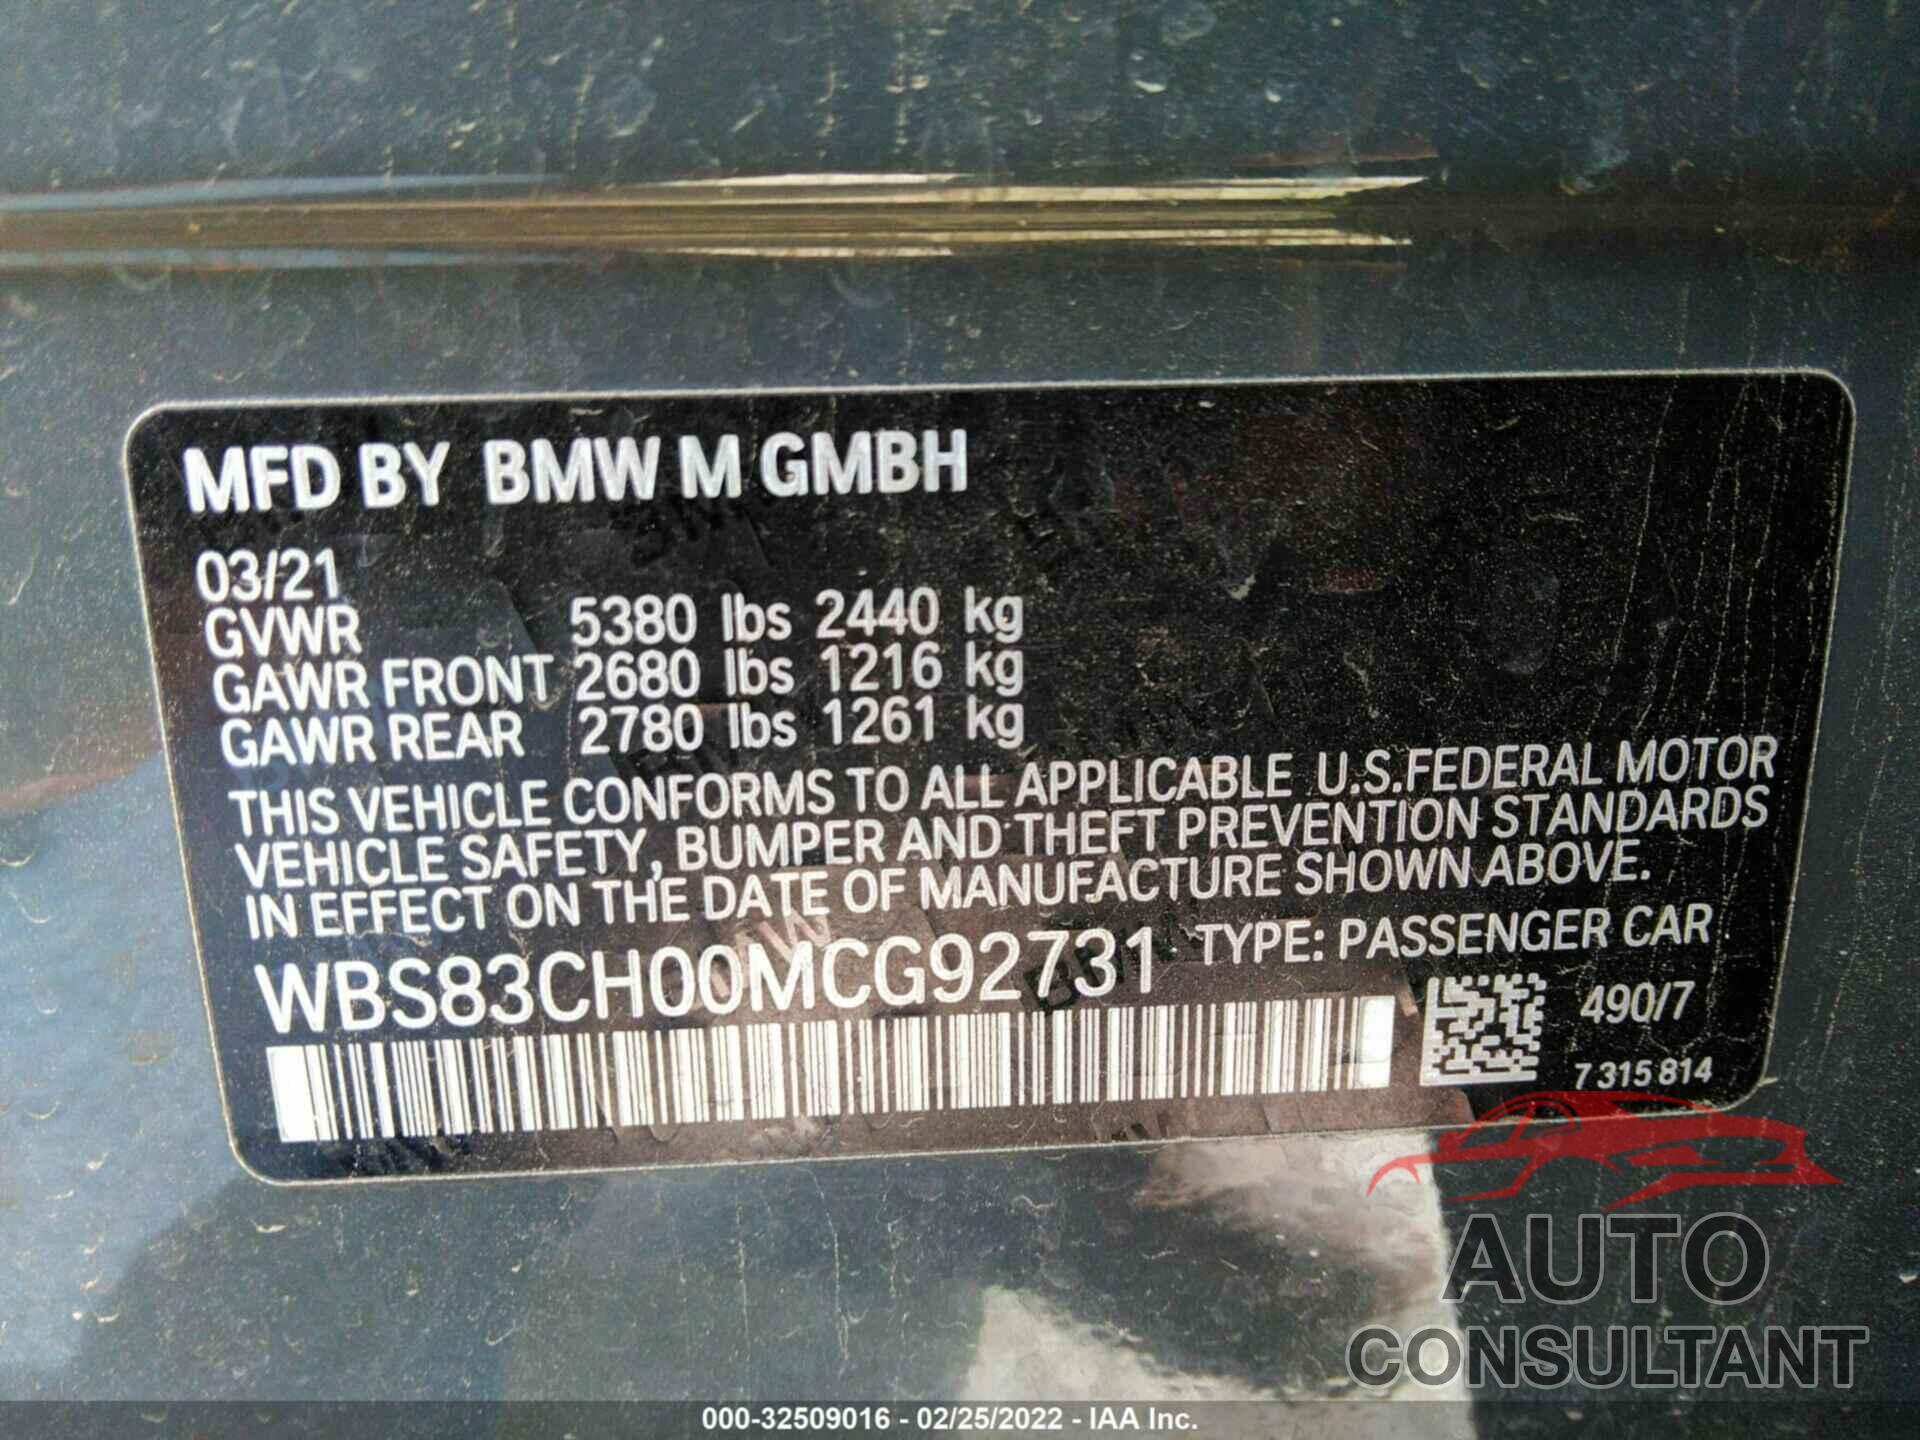 BMW M5 2021 - WBS83CH00MCG92731